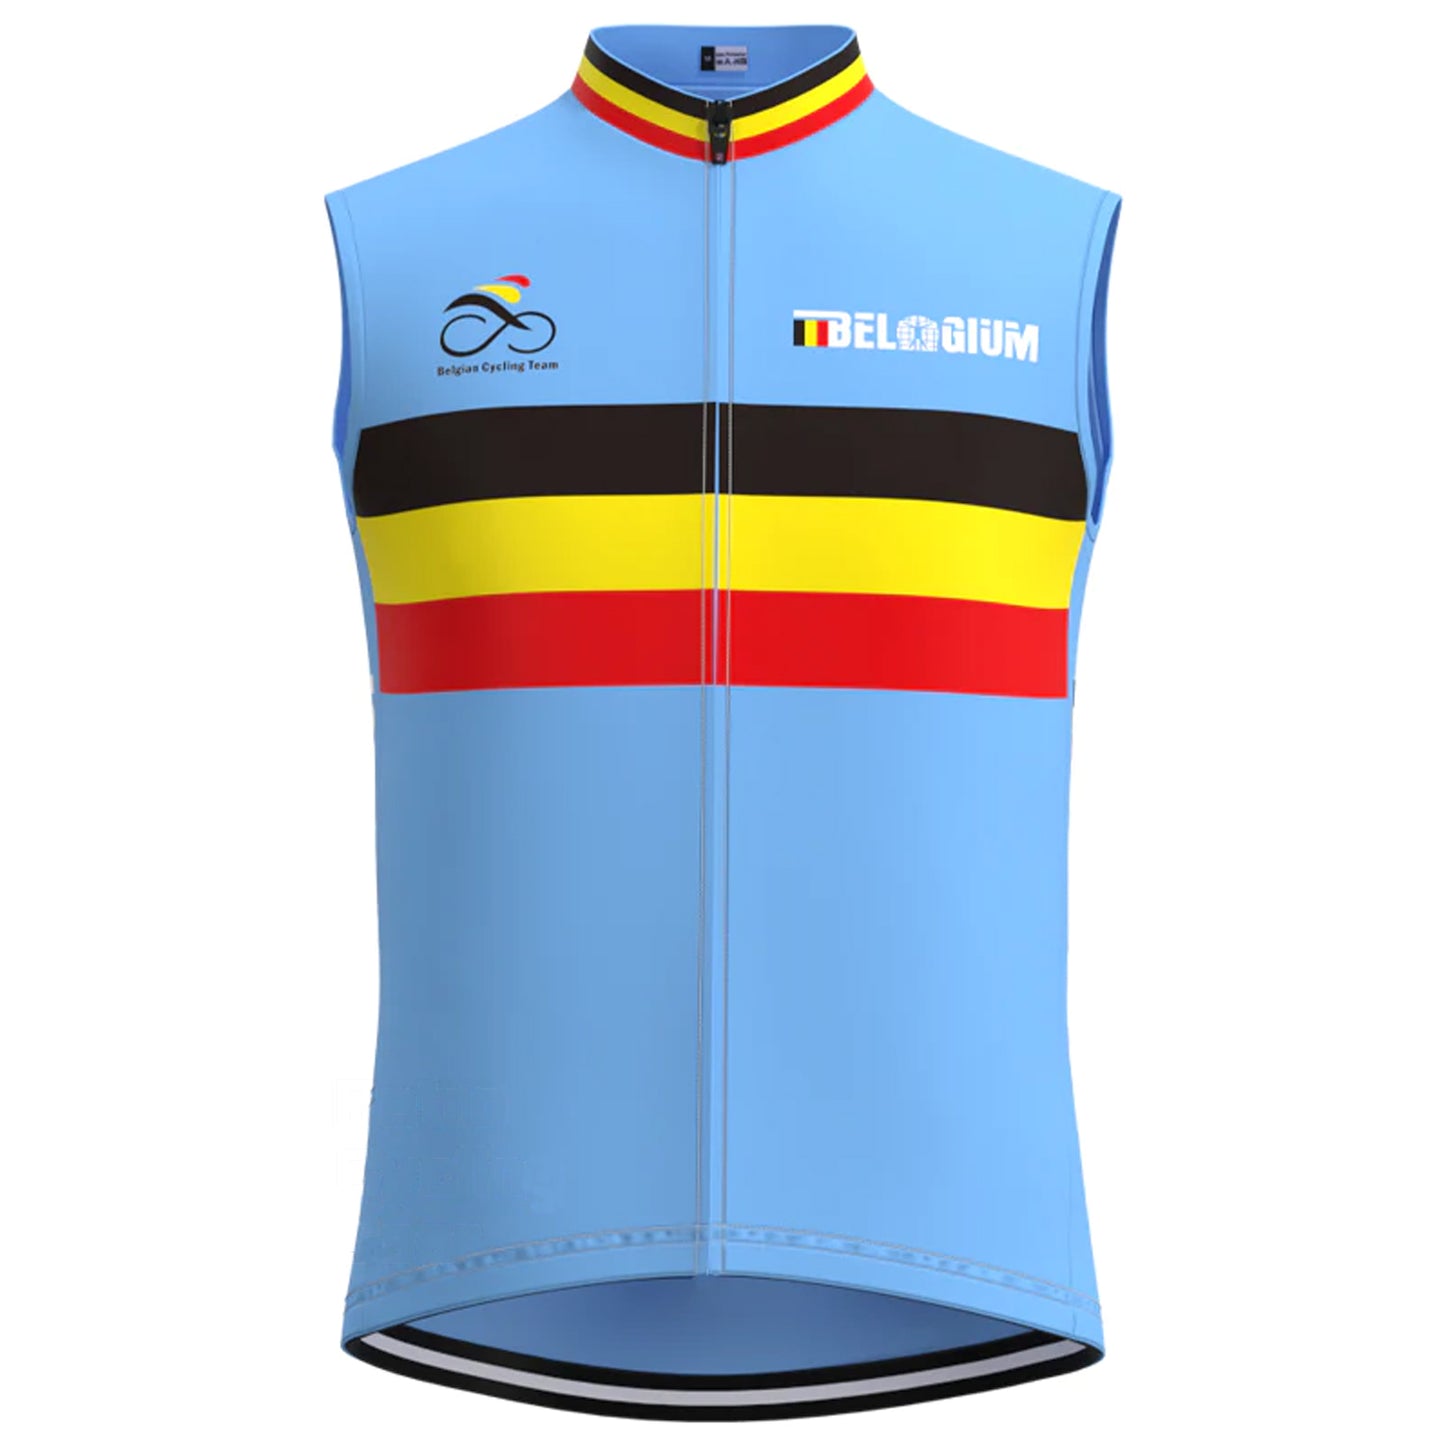 BELGIUM Blue Retro MTB Cycling Vest